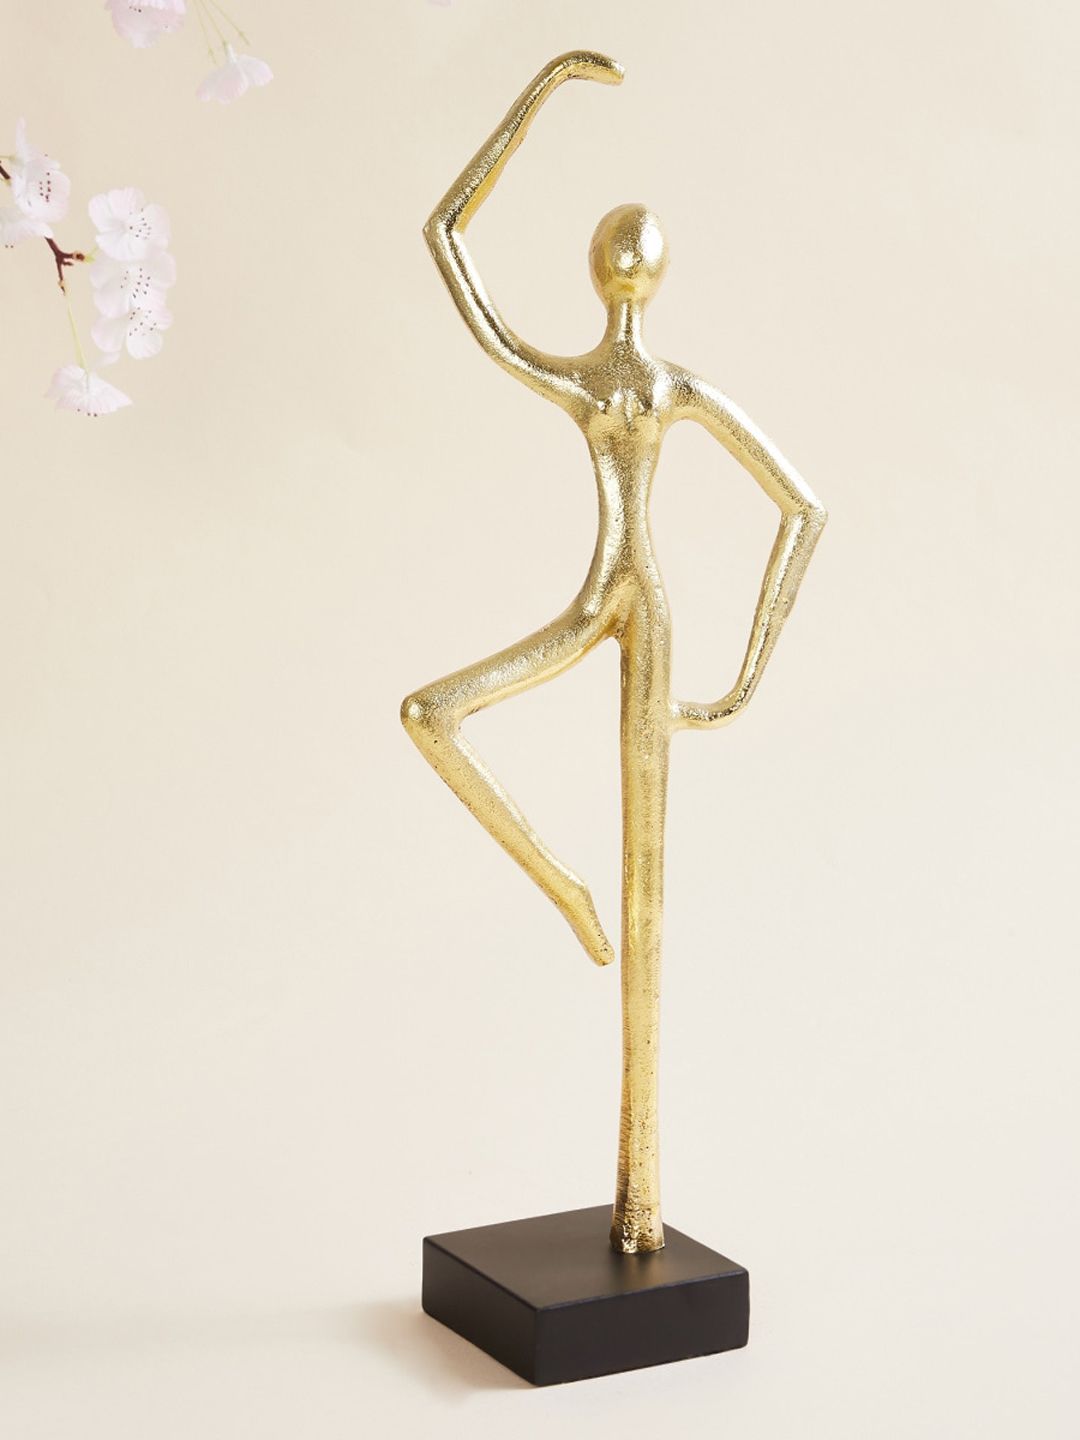 Home Centre Fiesta Gold Solid Metal Dancing Figurine Showpiece Price in India